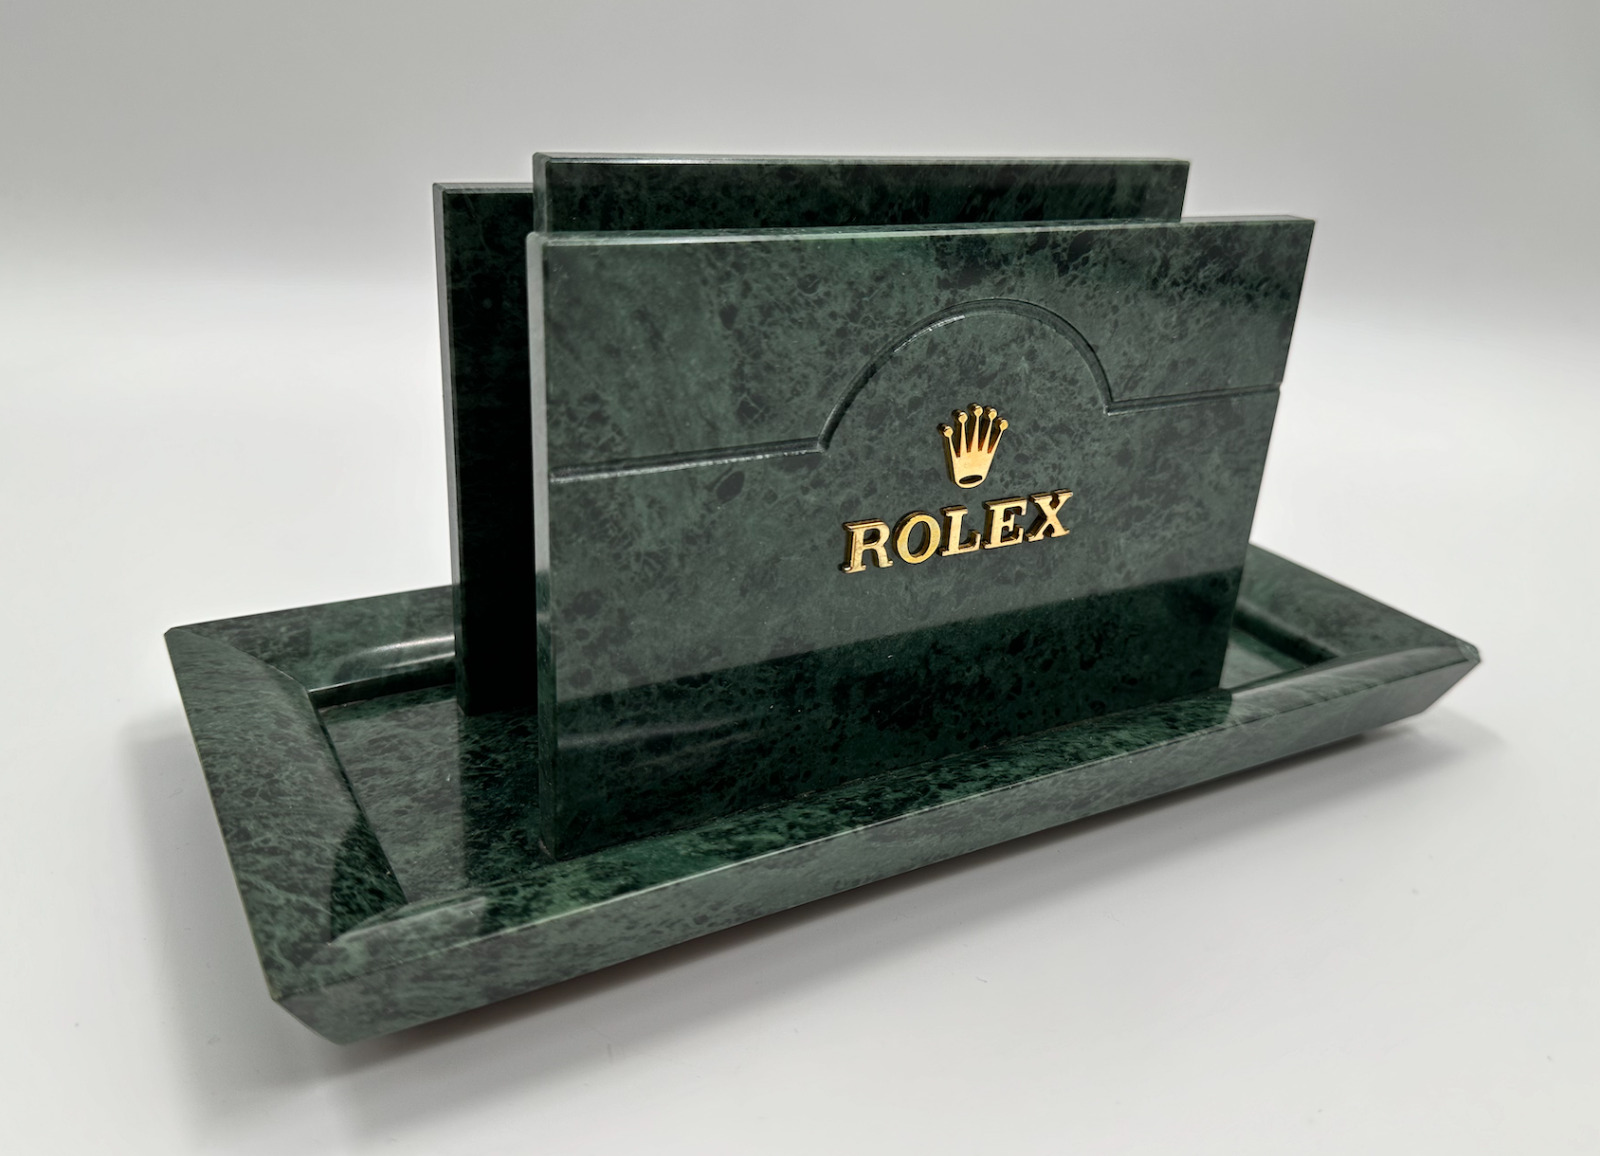 Rolex Green Marble Granite Magazine Letter Brief Catalogue Envelope Holder